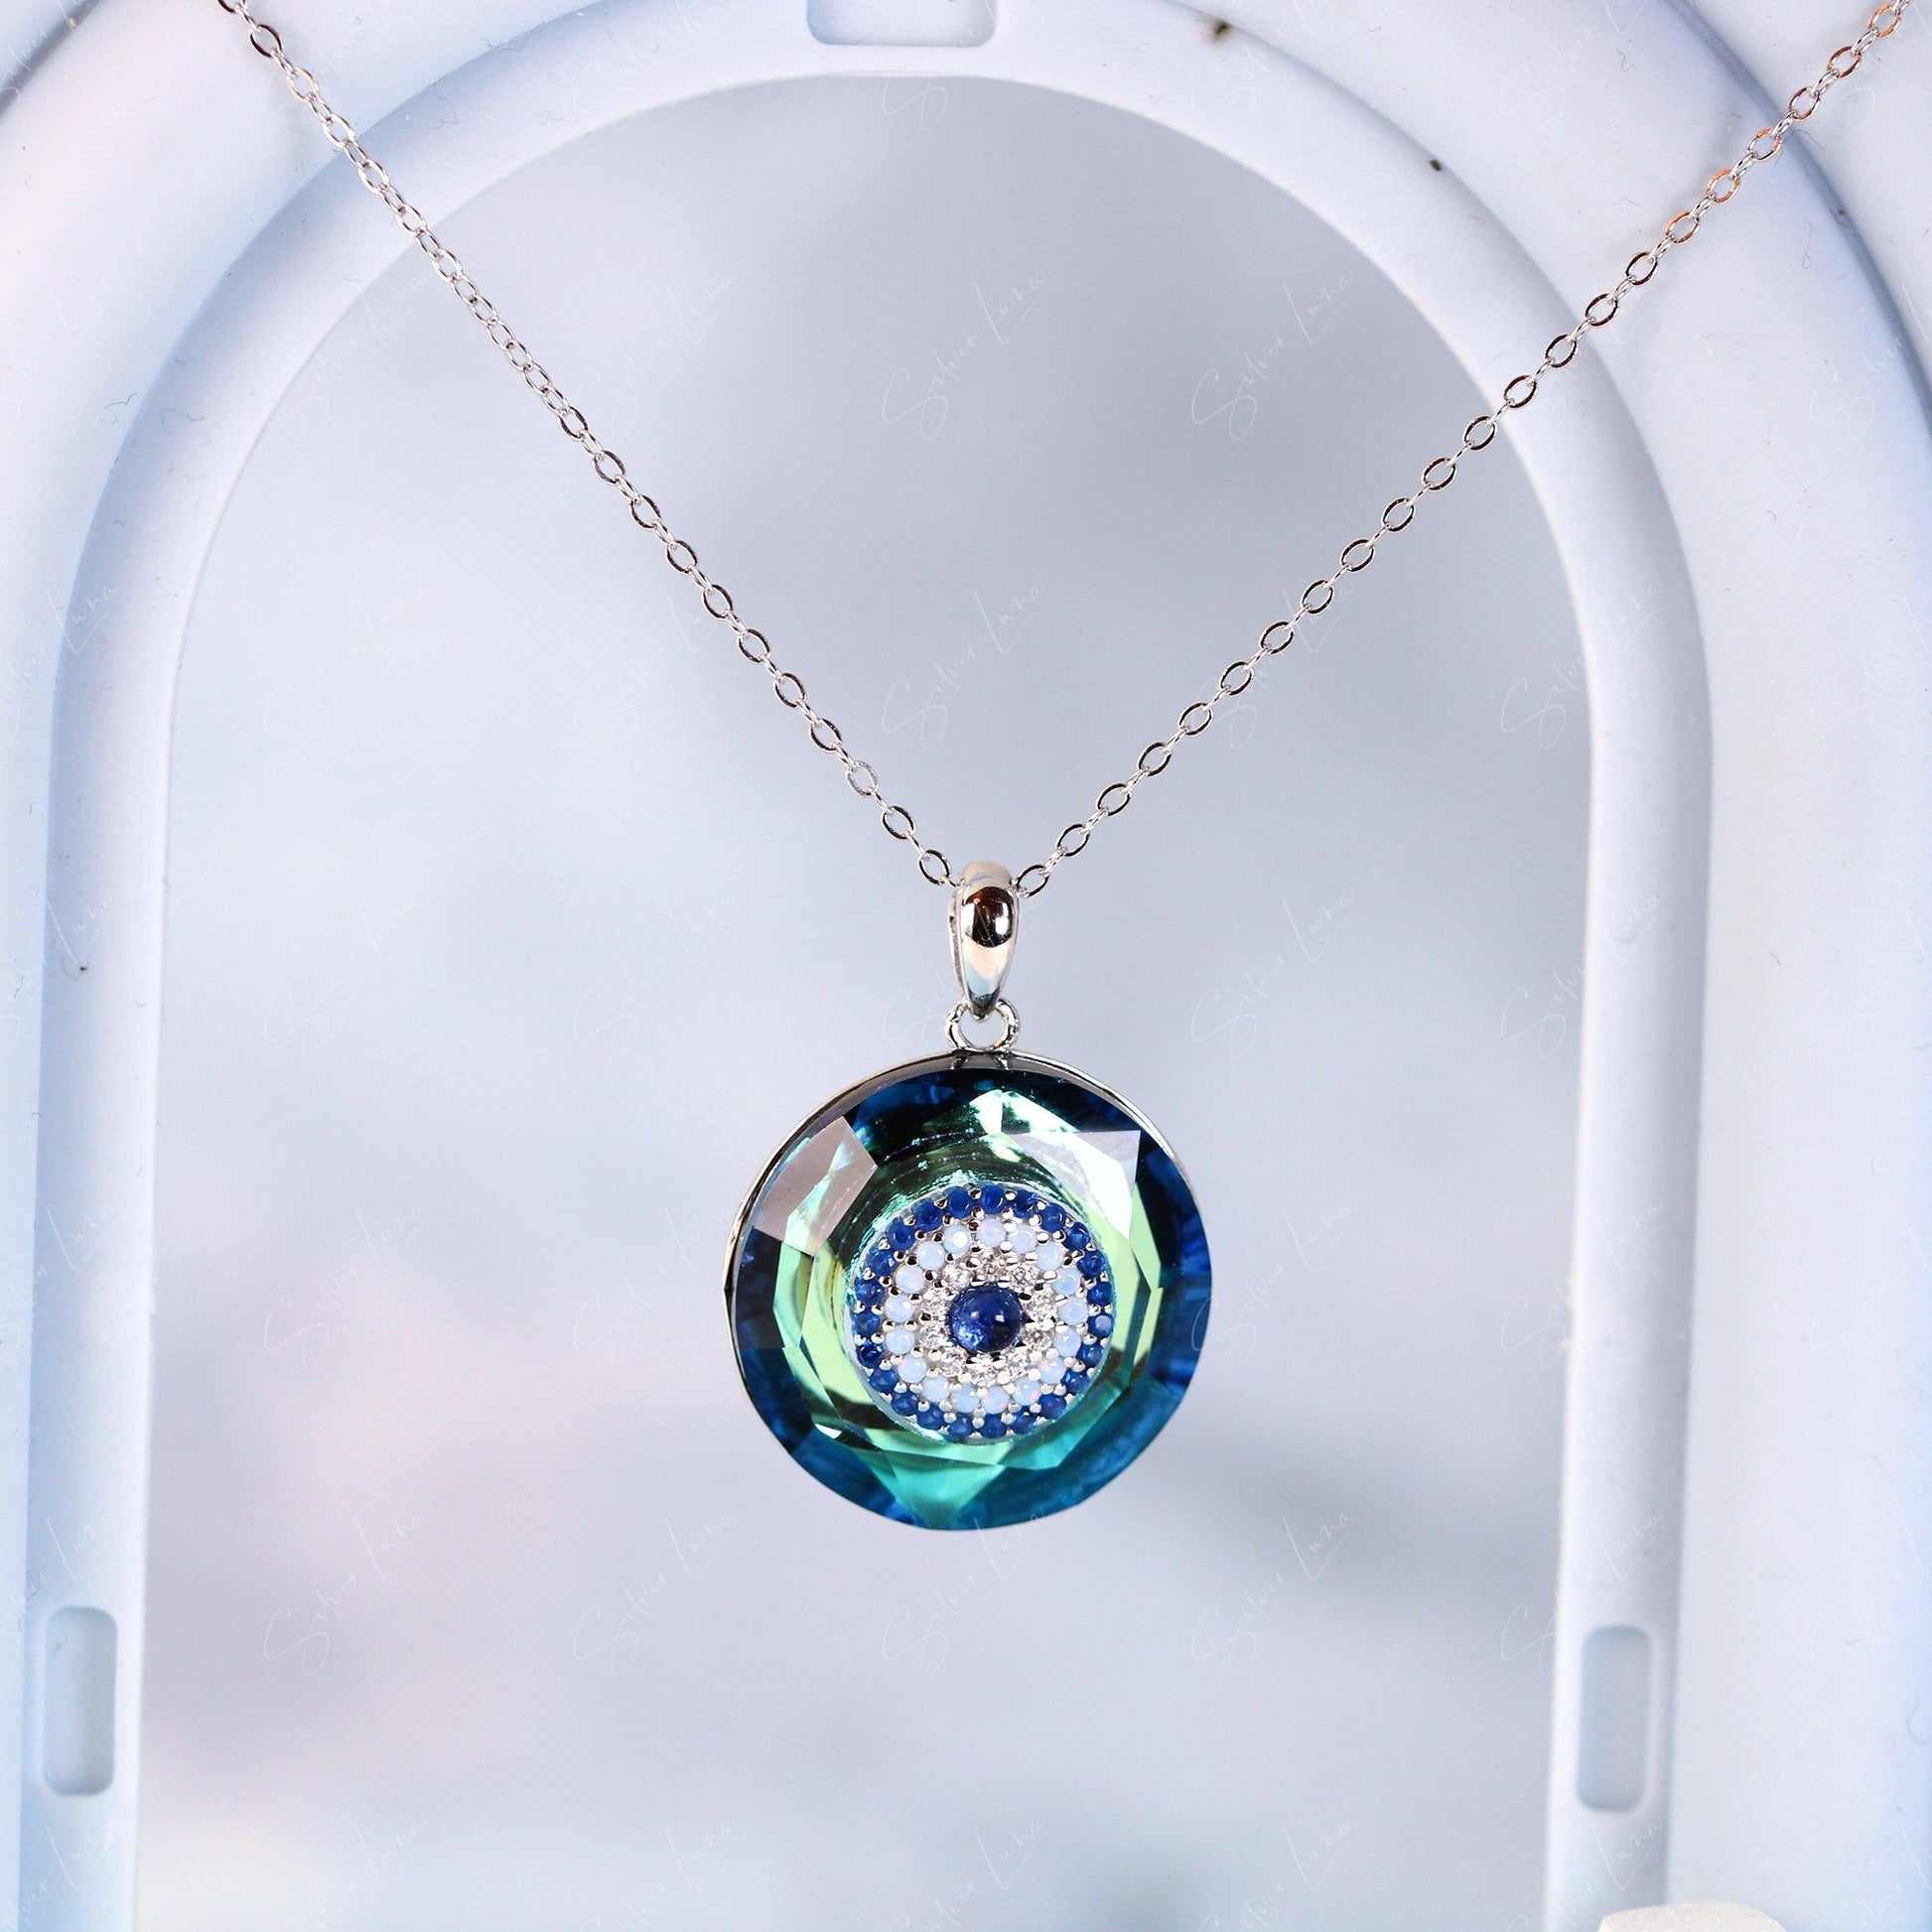 crystal evil eye pendant necklace